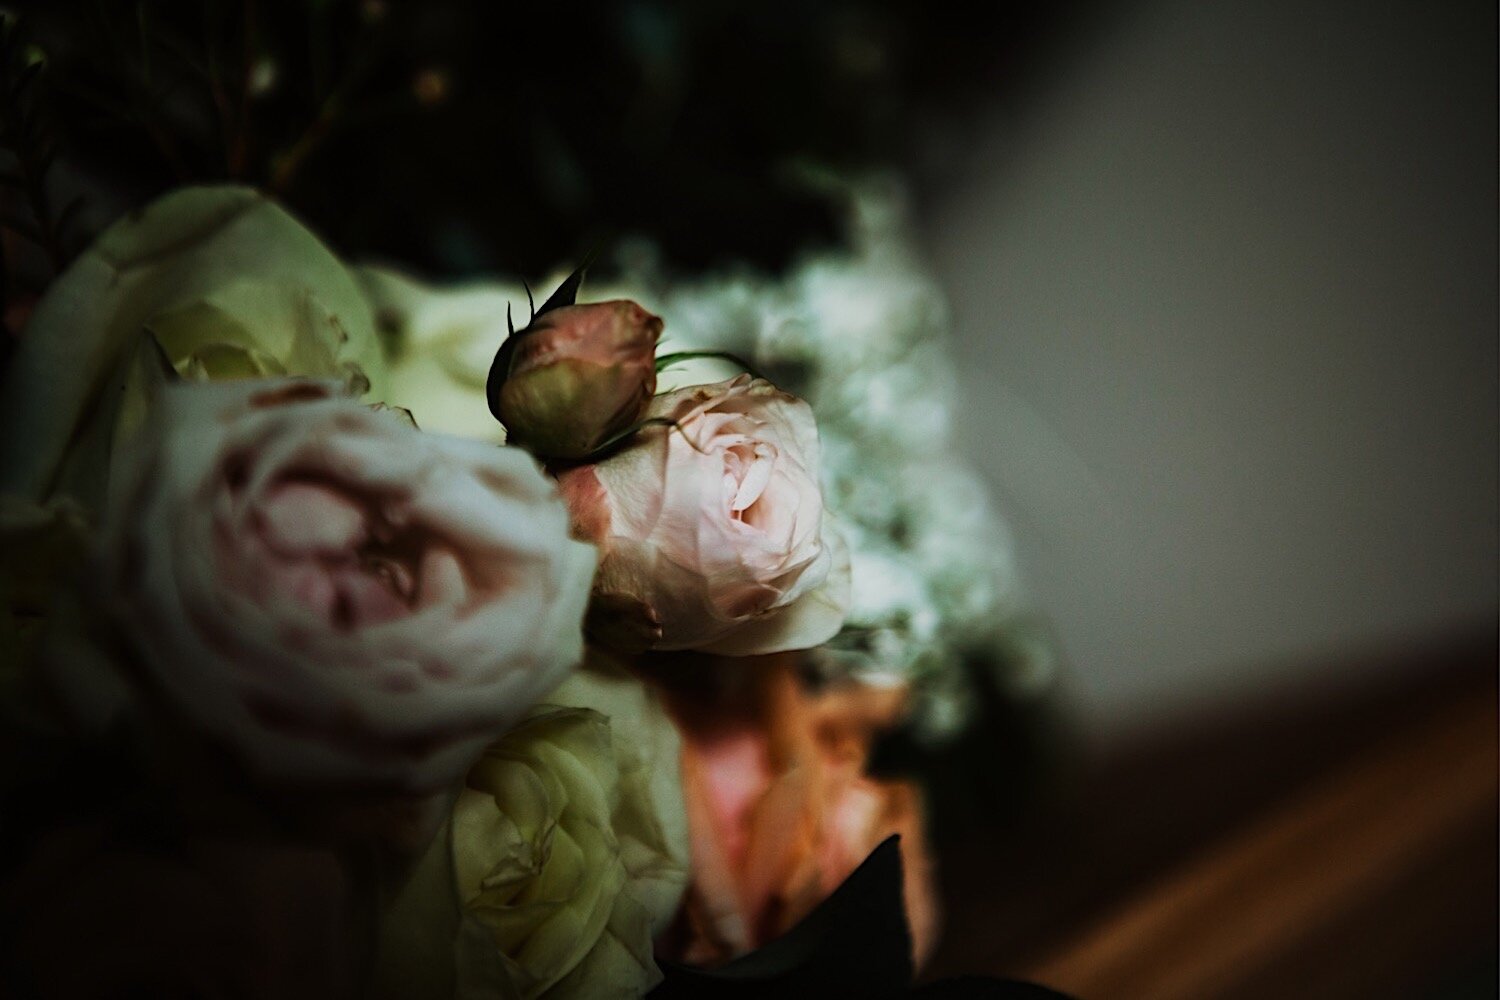 014_TWS-64_bride_floristry_bridal_photography_henley_oxfordshire_millitary_flowers_bouquet_crooked_wedding_groom_winter_billet.jpg